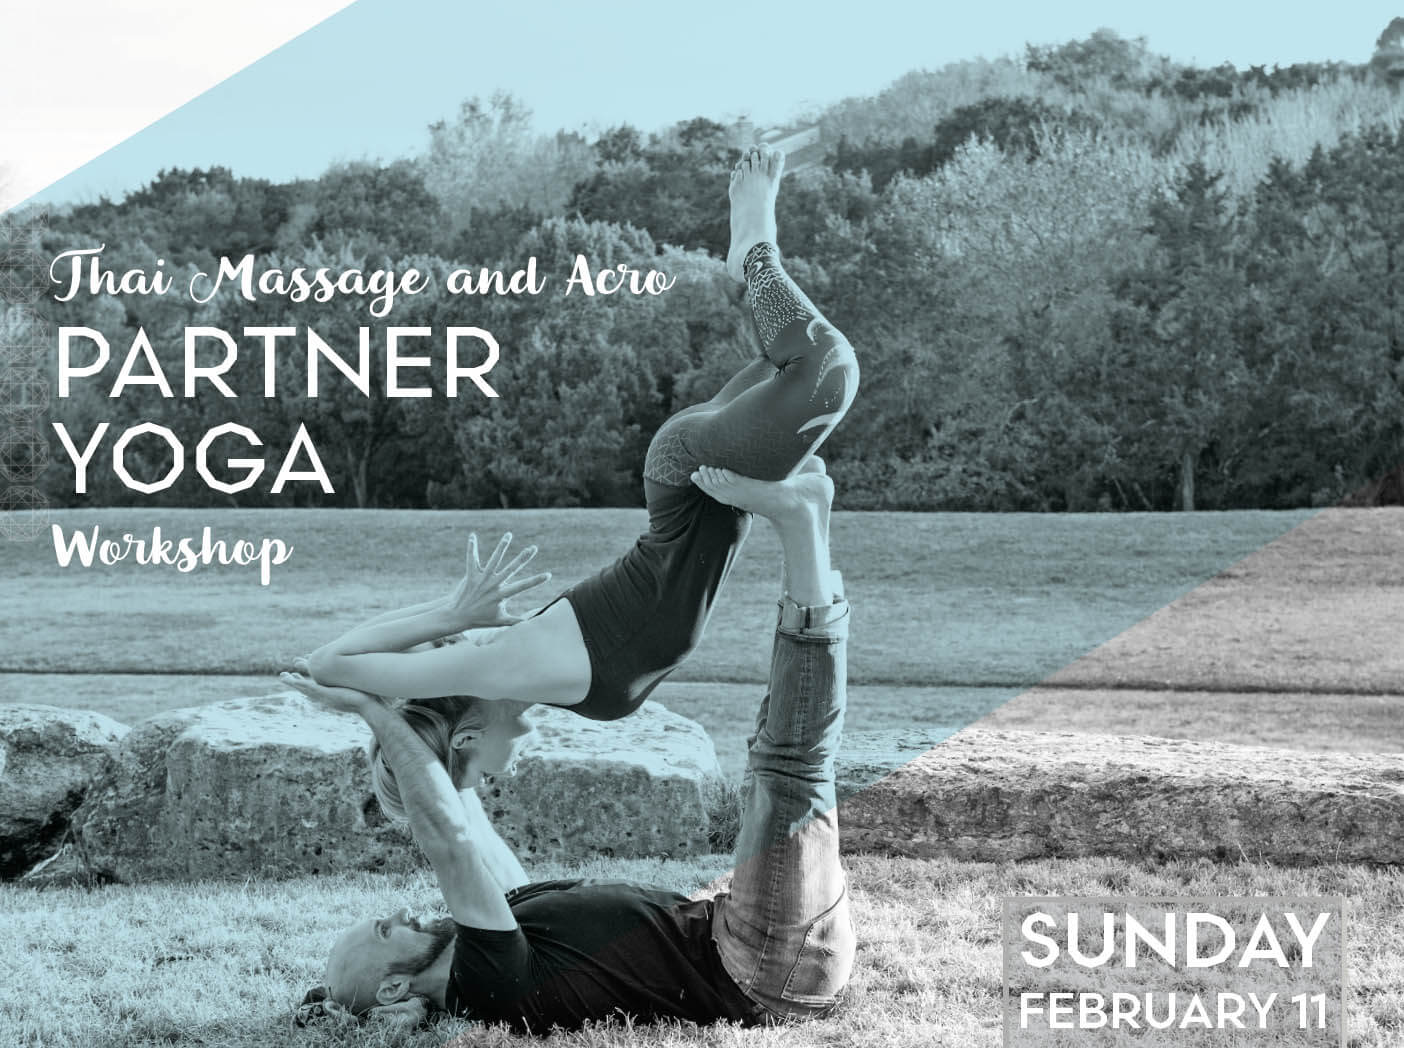 Thai Massage and Acro Partner Yoga Workshop